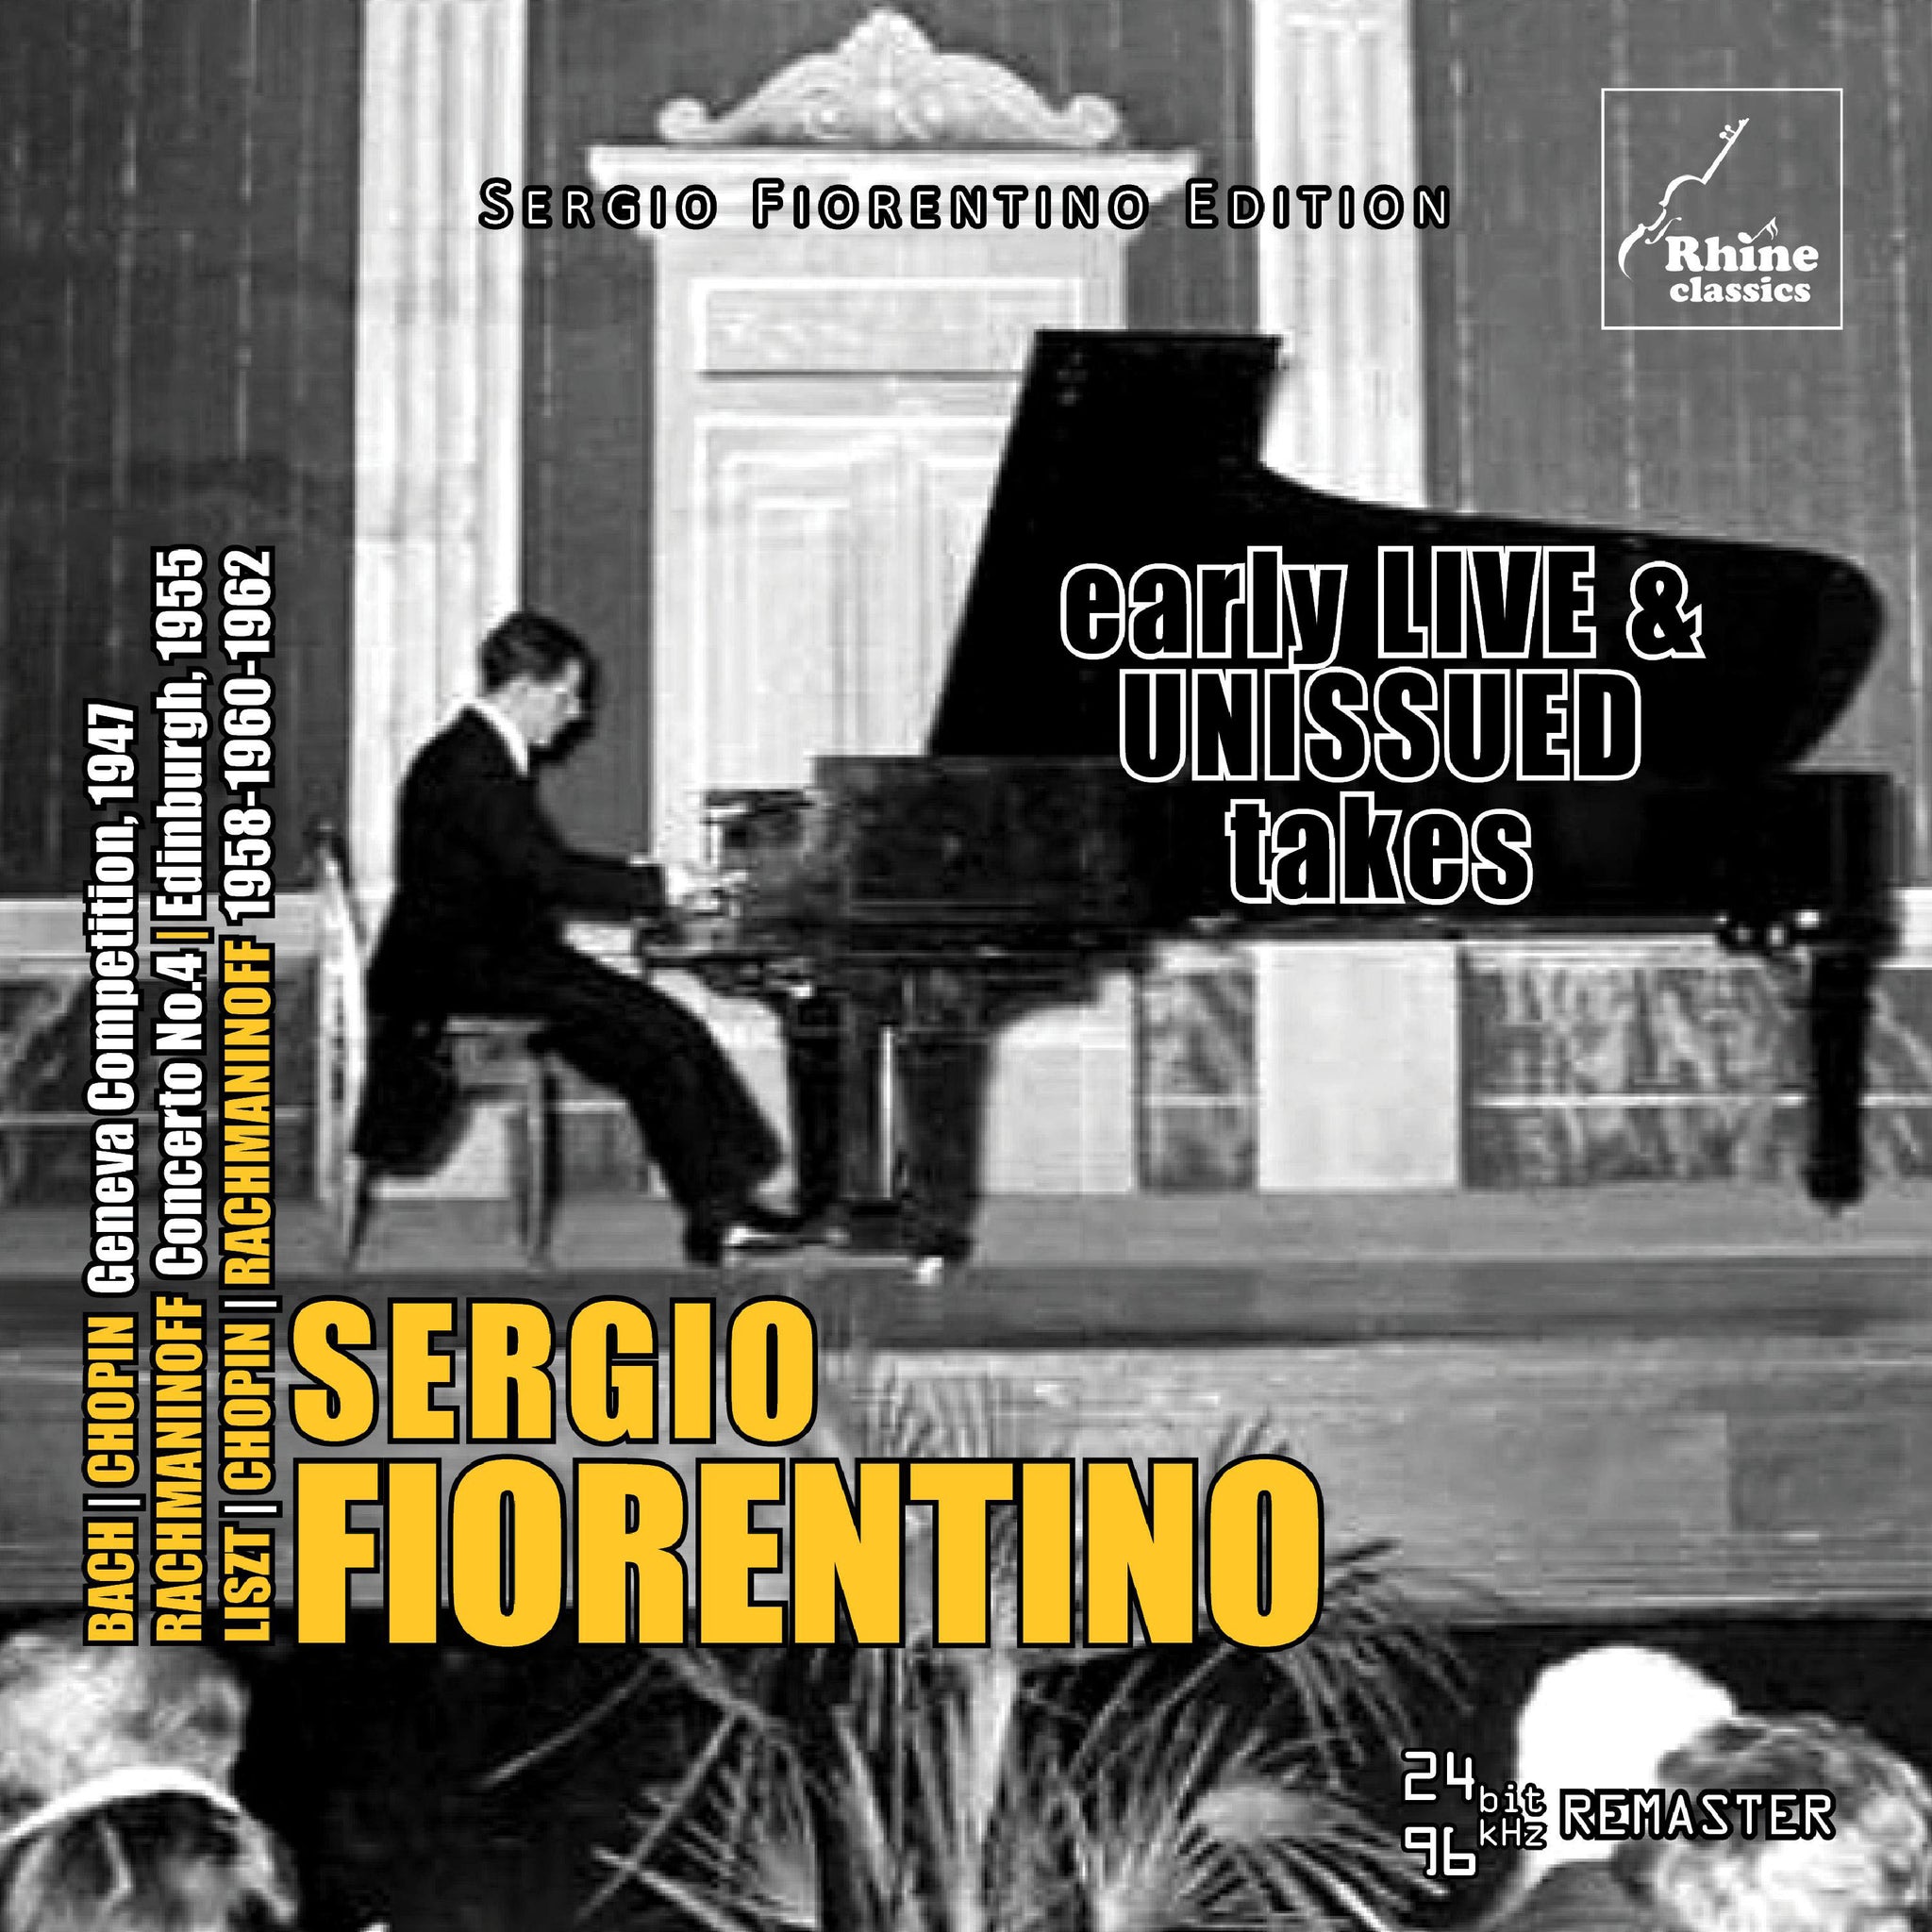 Early Live & Unissued Takes / Sergio FIorentino